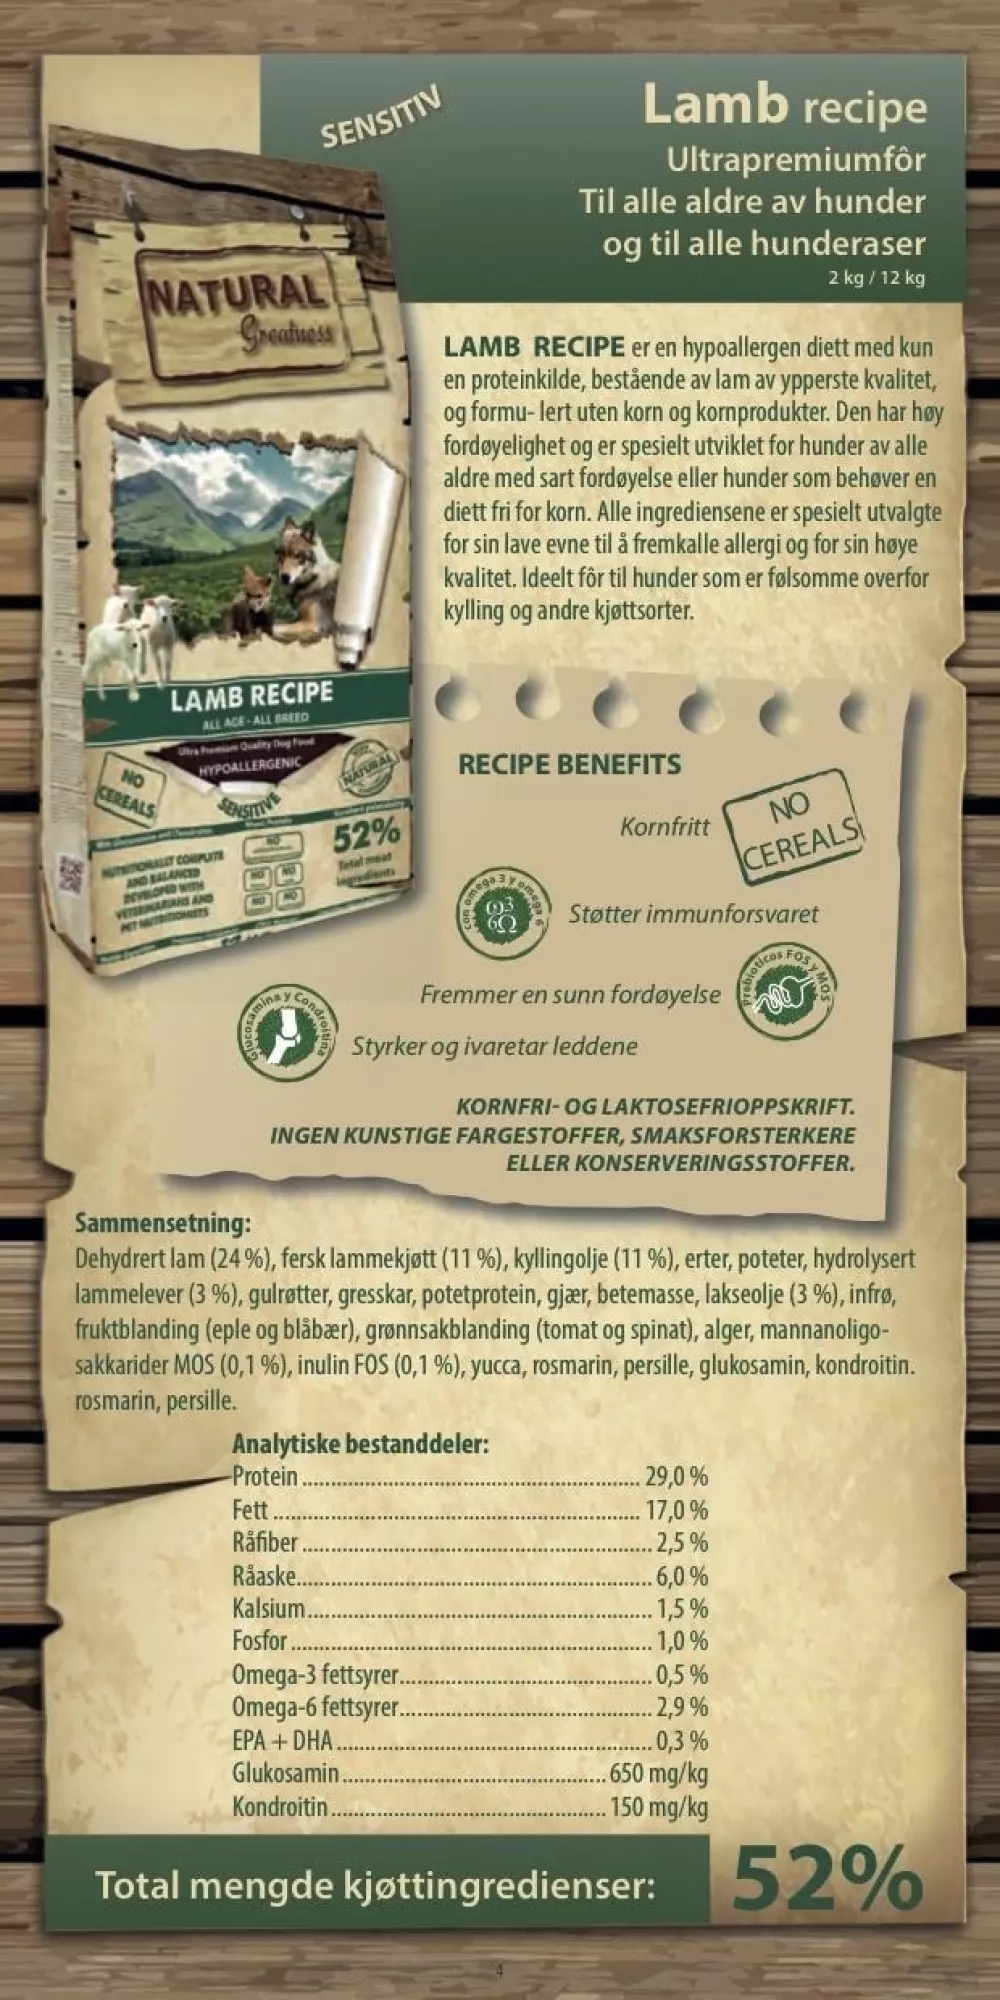 Natural Greatness Lamb Recipe - Sensitive10 kg, 8425402687390, Hundemat, Natural Greatness, Arctic Pets AS, Lamb Recipe - Sensitive, Tørrfor, Voksen